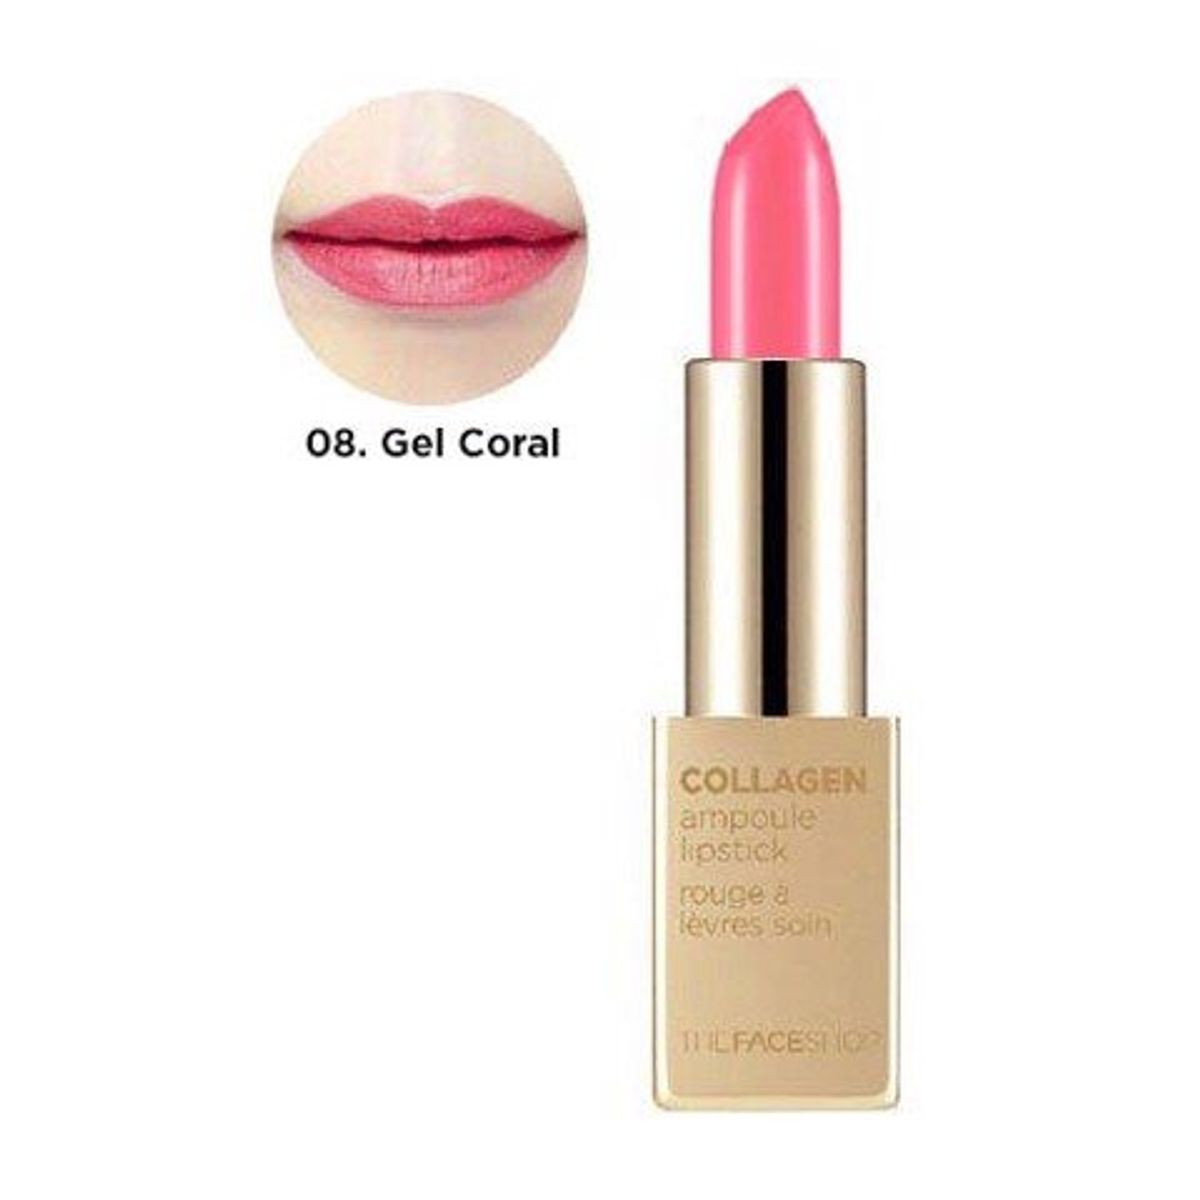 lipstick-day-son-thoi-collagen-ampoule-lipstick-11